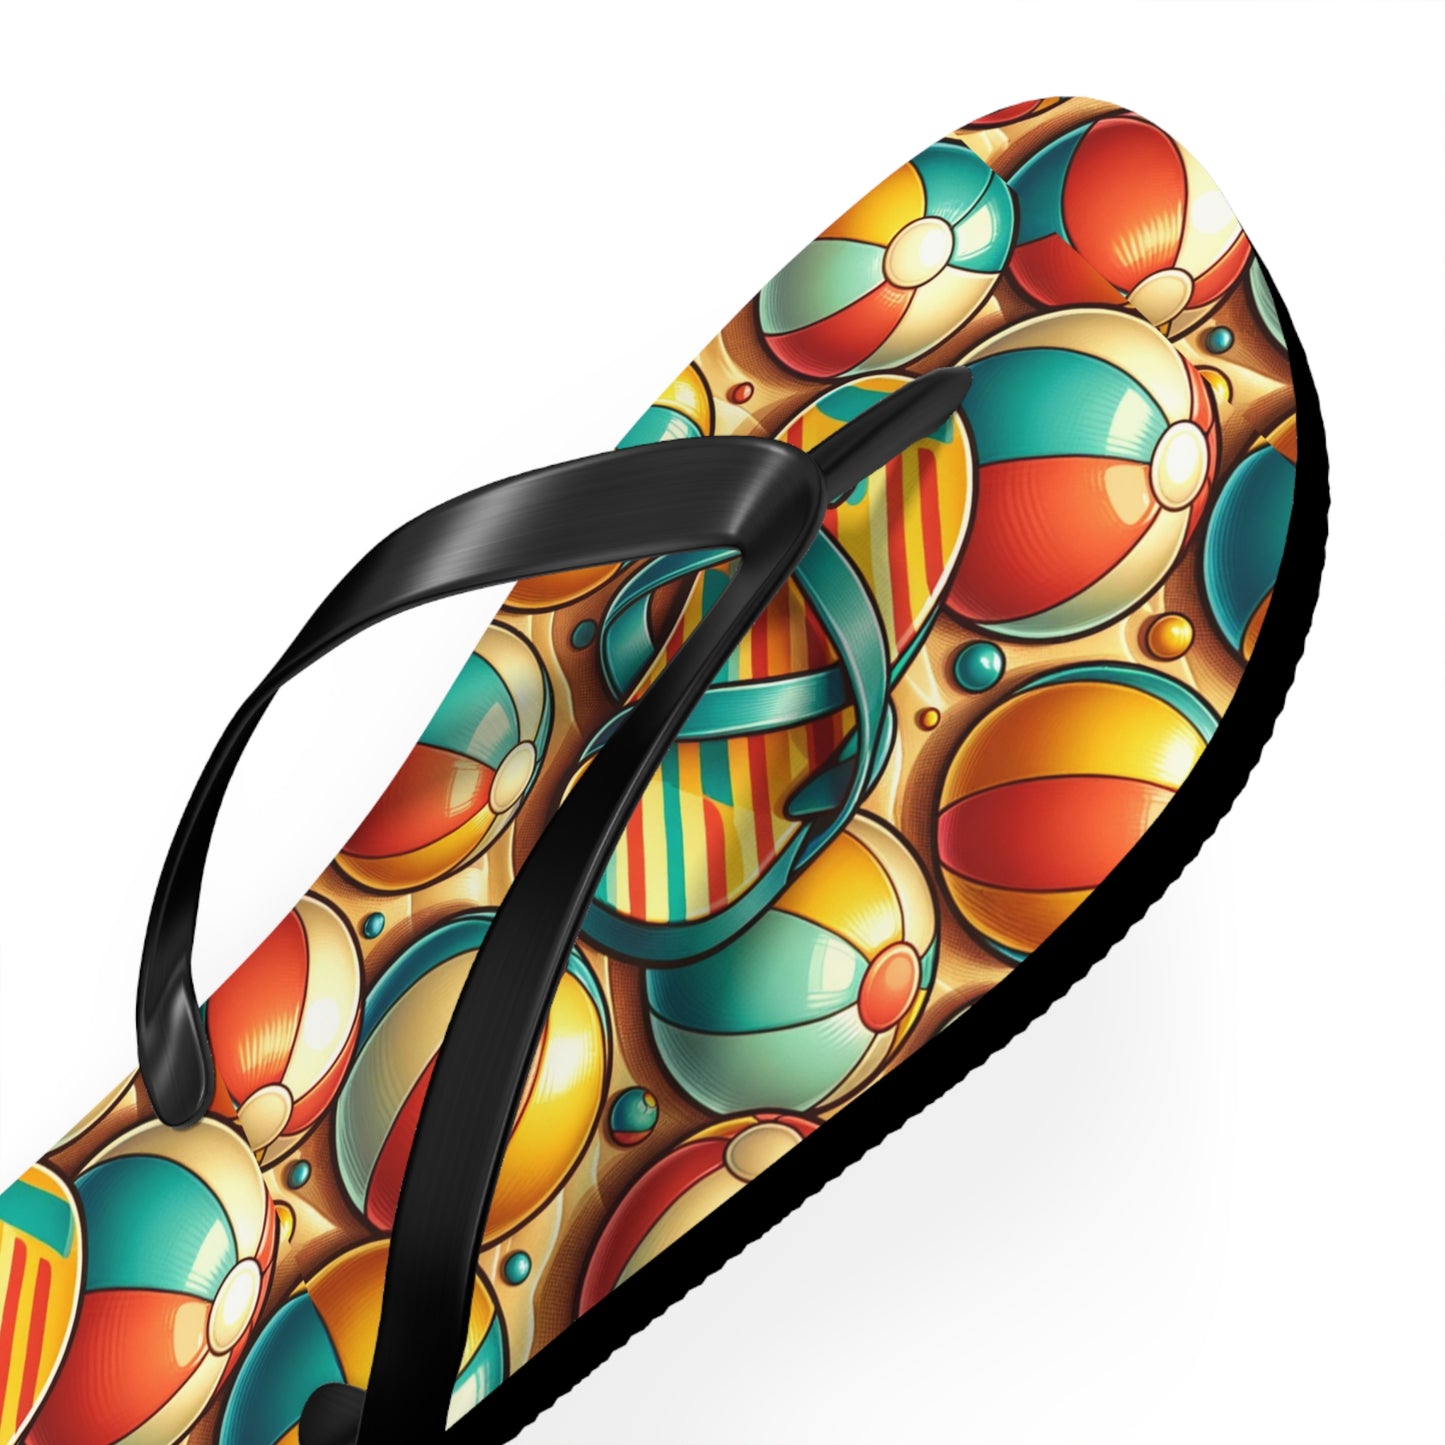 Sunny Beachside Fun Beach Ball Flip Flops - Colorful and Playful Summer Footwear